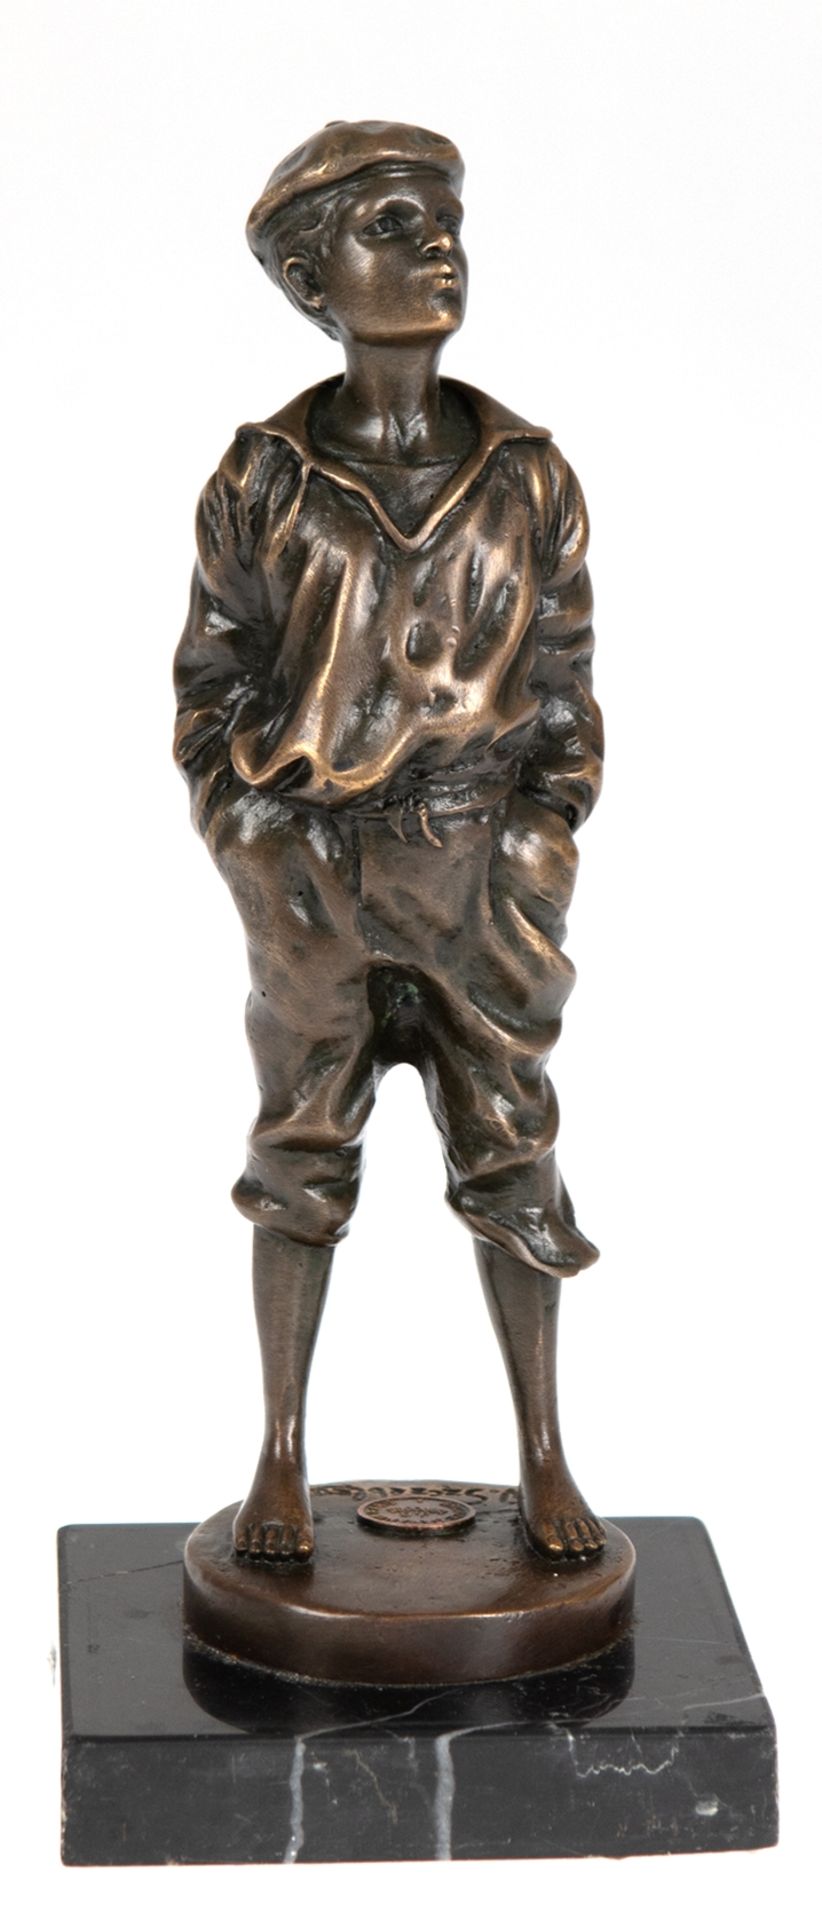 Figur "Stehender Knabe mit Baskenmütze", Bronze braun patiniert,  bez. "V. Szczeblewsky", Gießermar